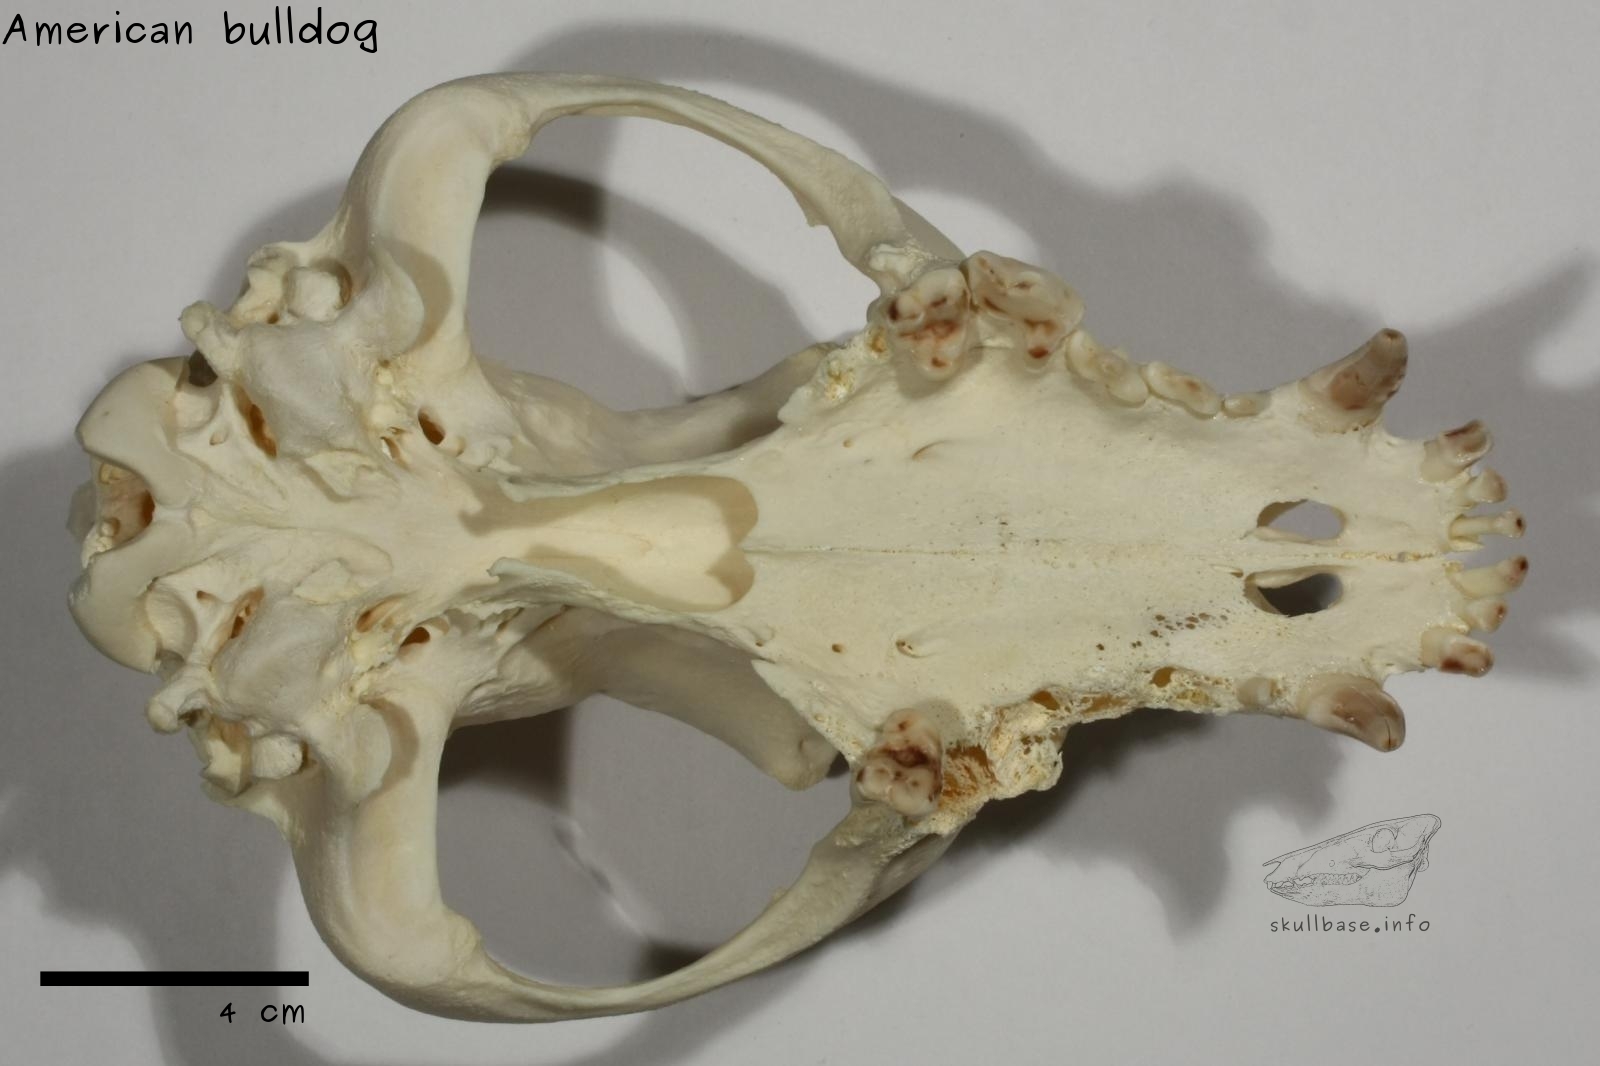 American bulldog (Canis lupus familiaris) skull ventral view